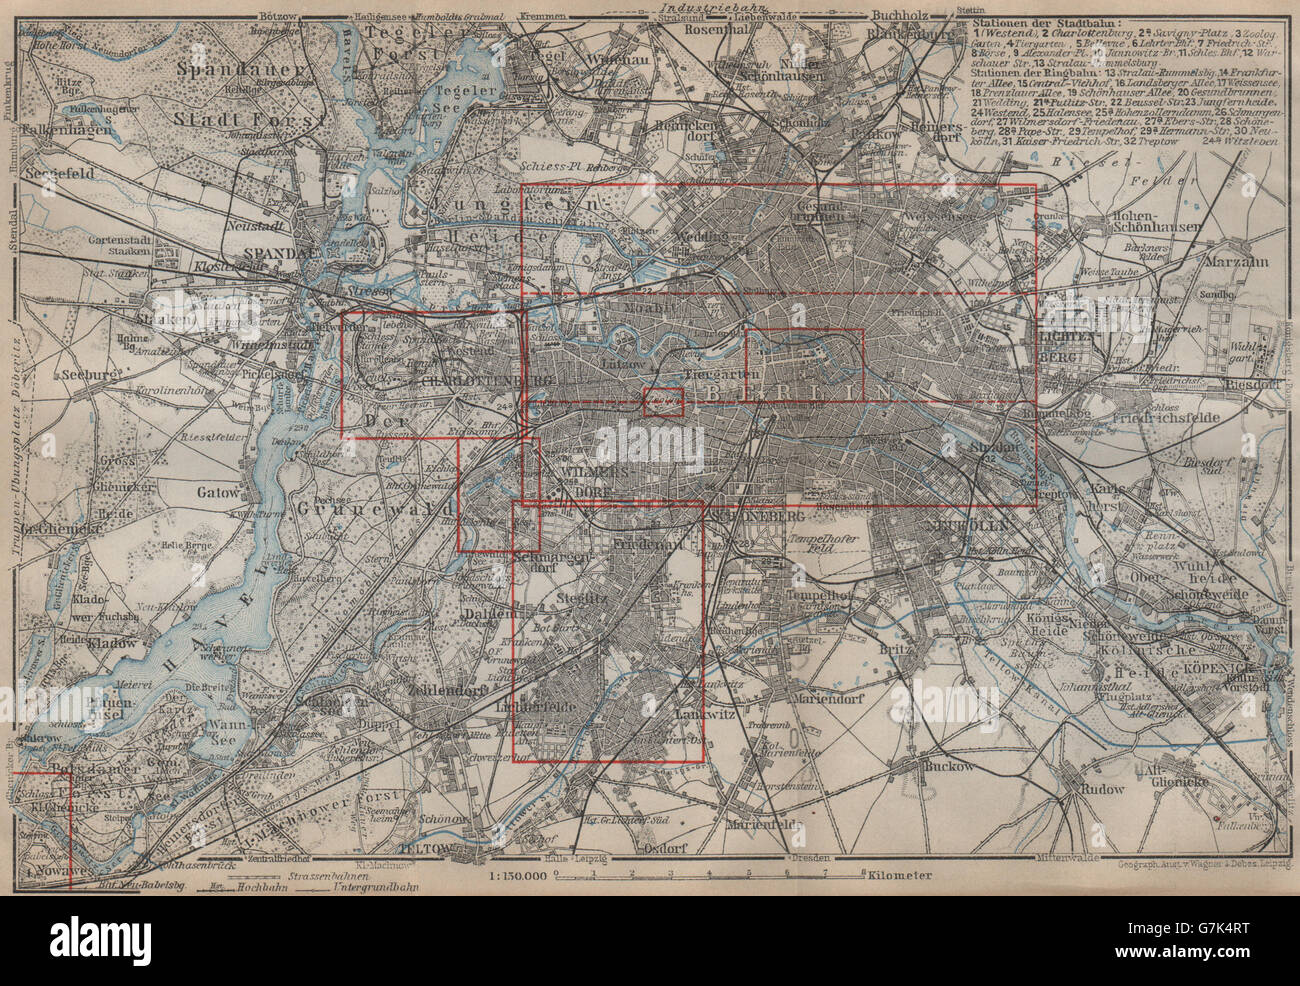 BERLIN & environs umgebung. Spandau Rixdorf Lichtenberg Zehlendorf, 1923 map Stock Photo